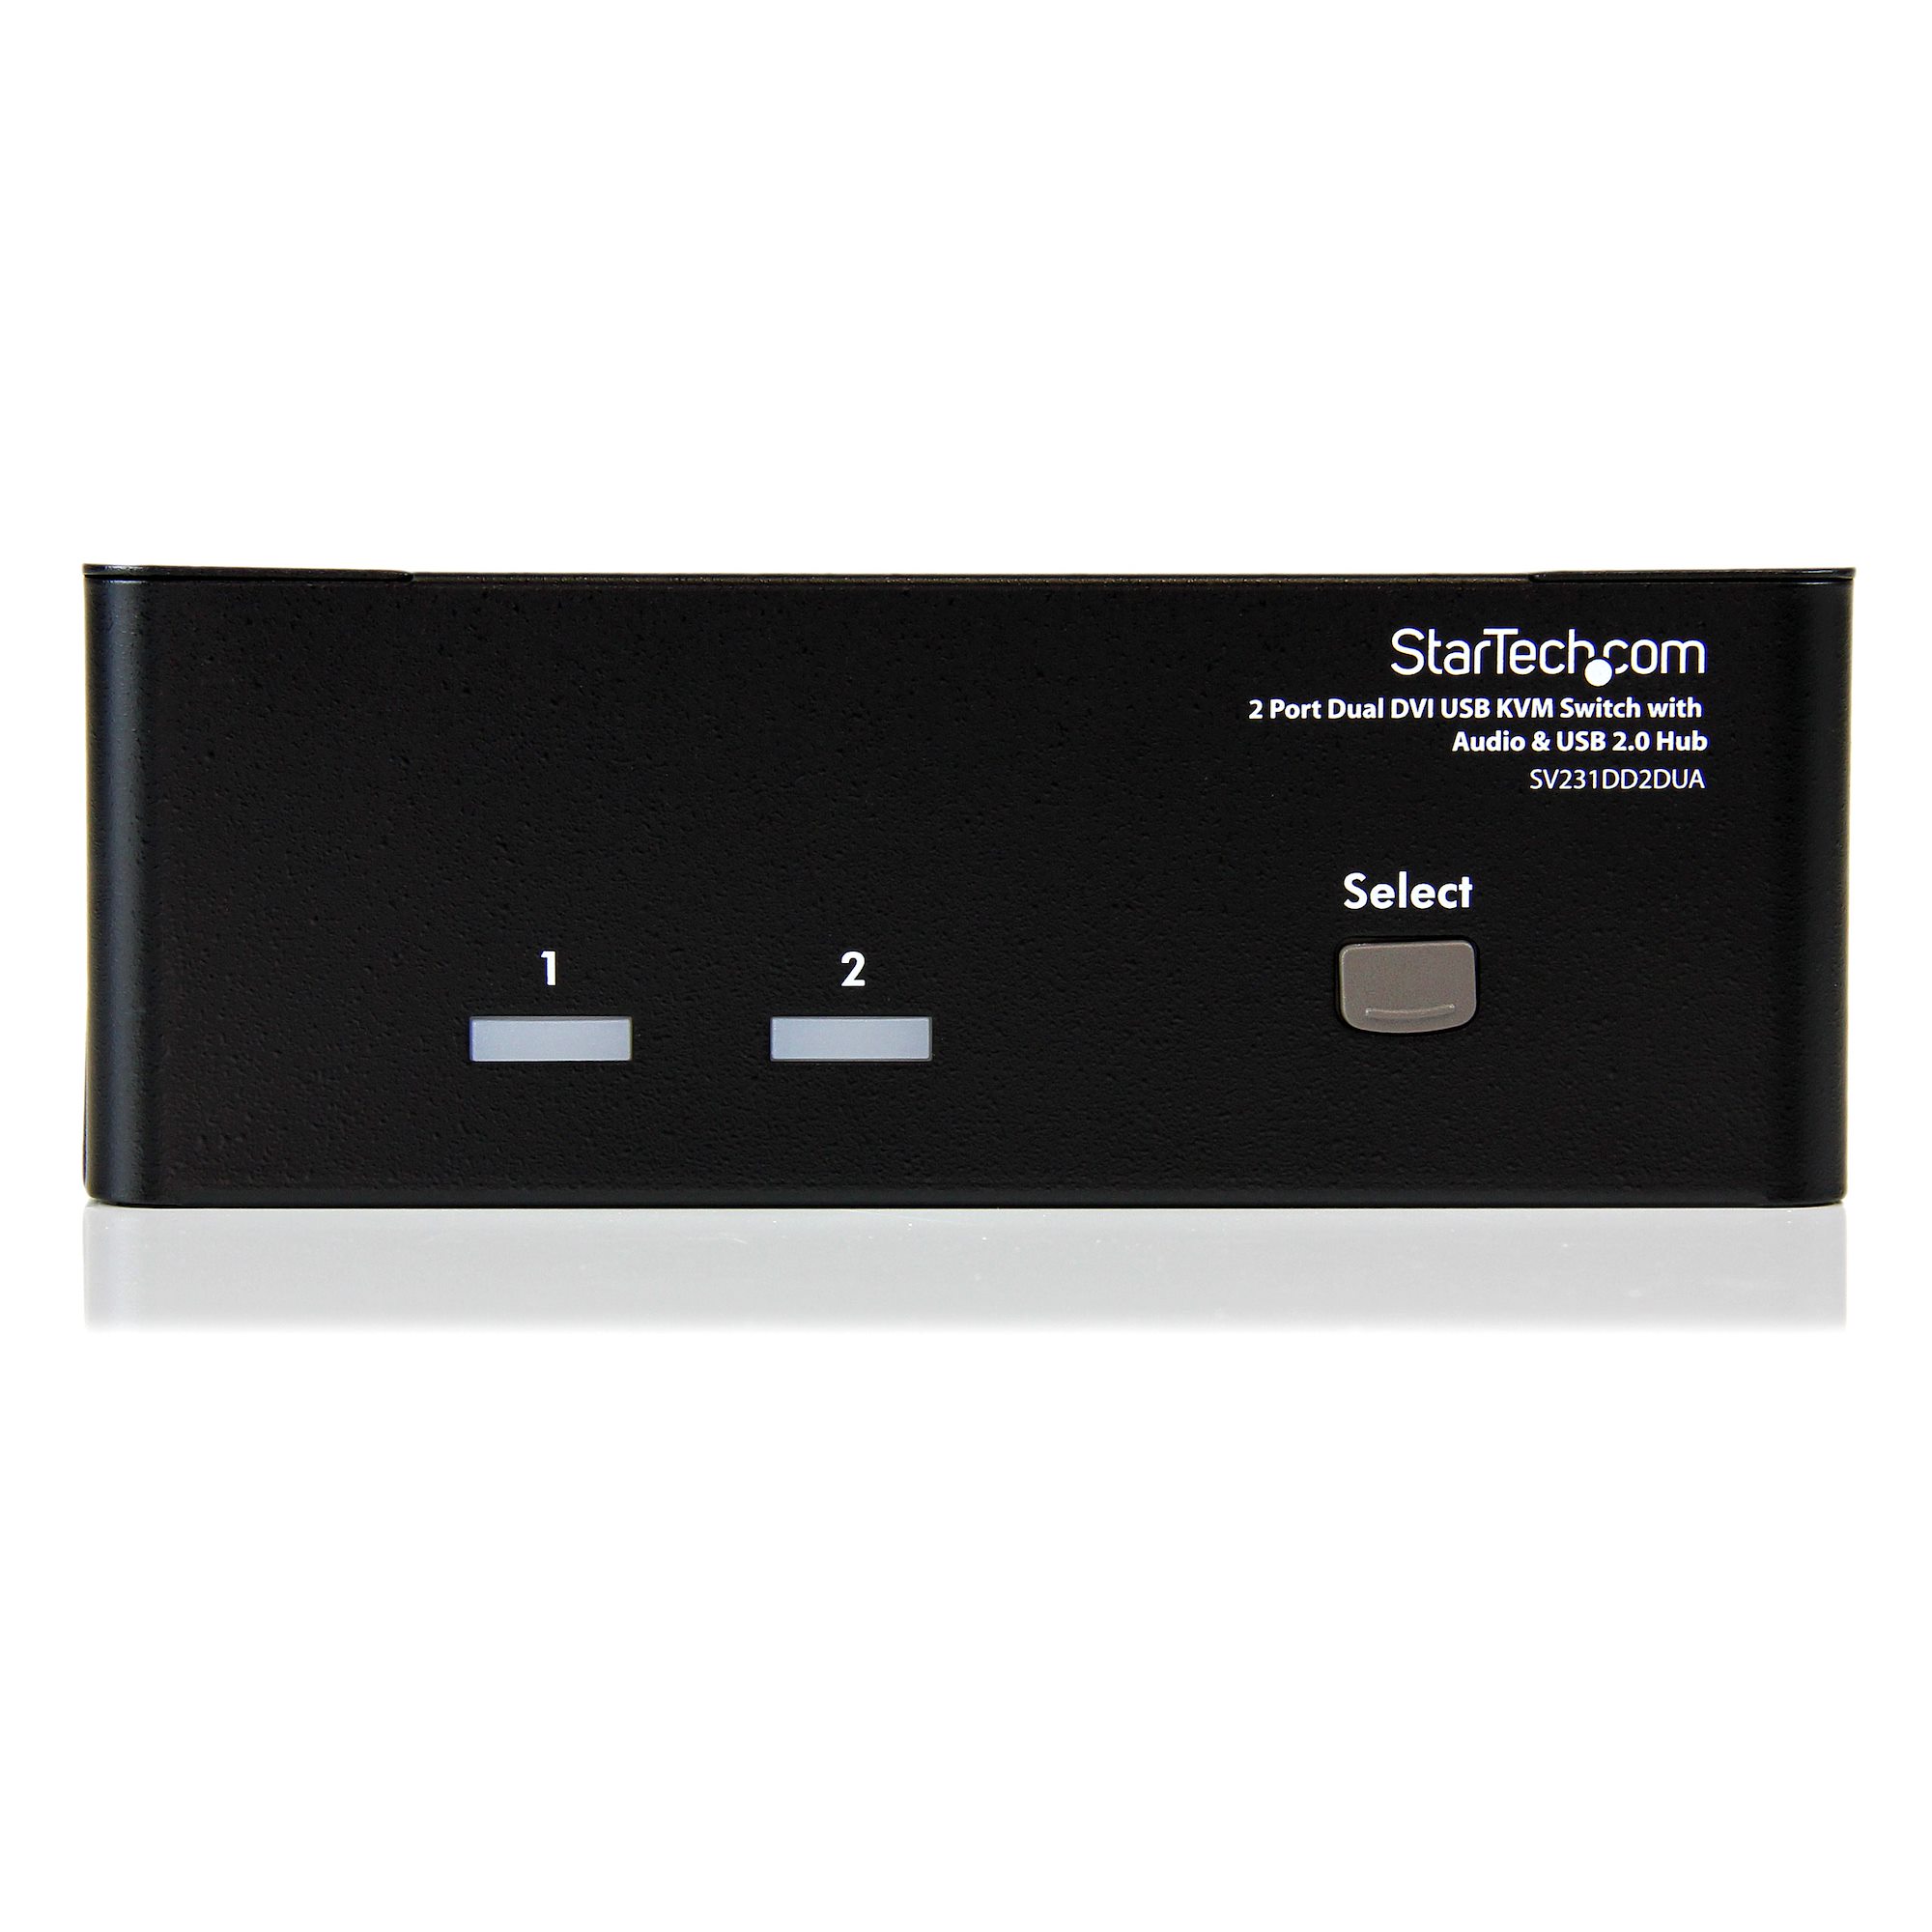 2 Port Dual DVI USB KVM Switch with Audio & USB 2.0 Hub